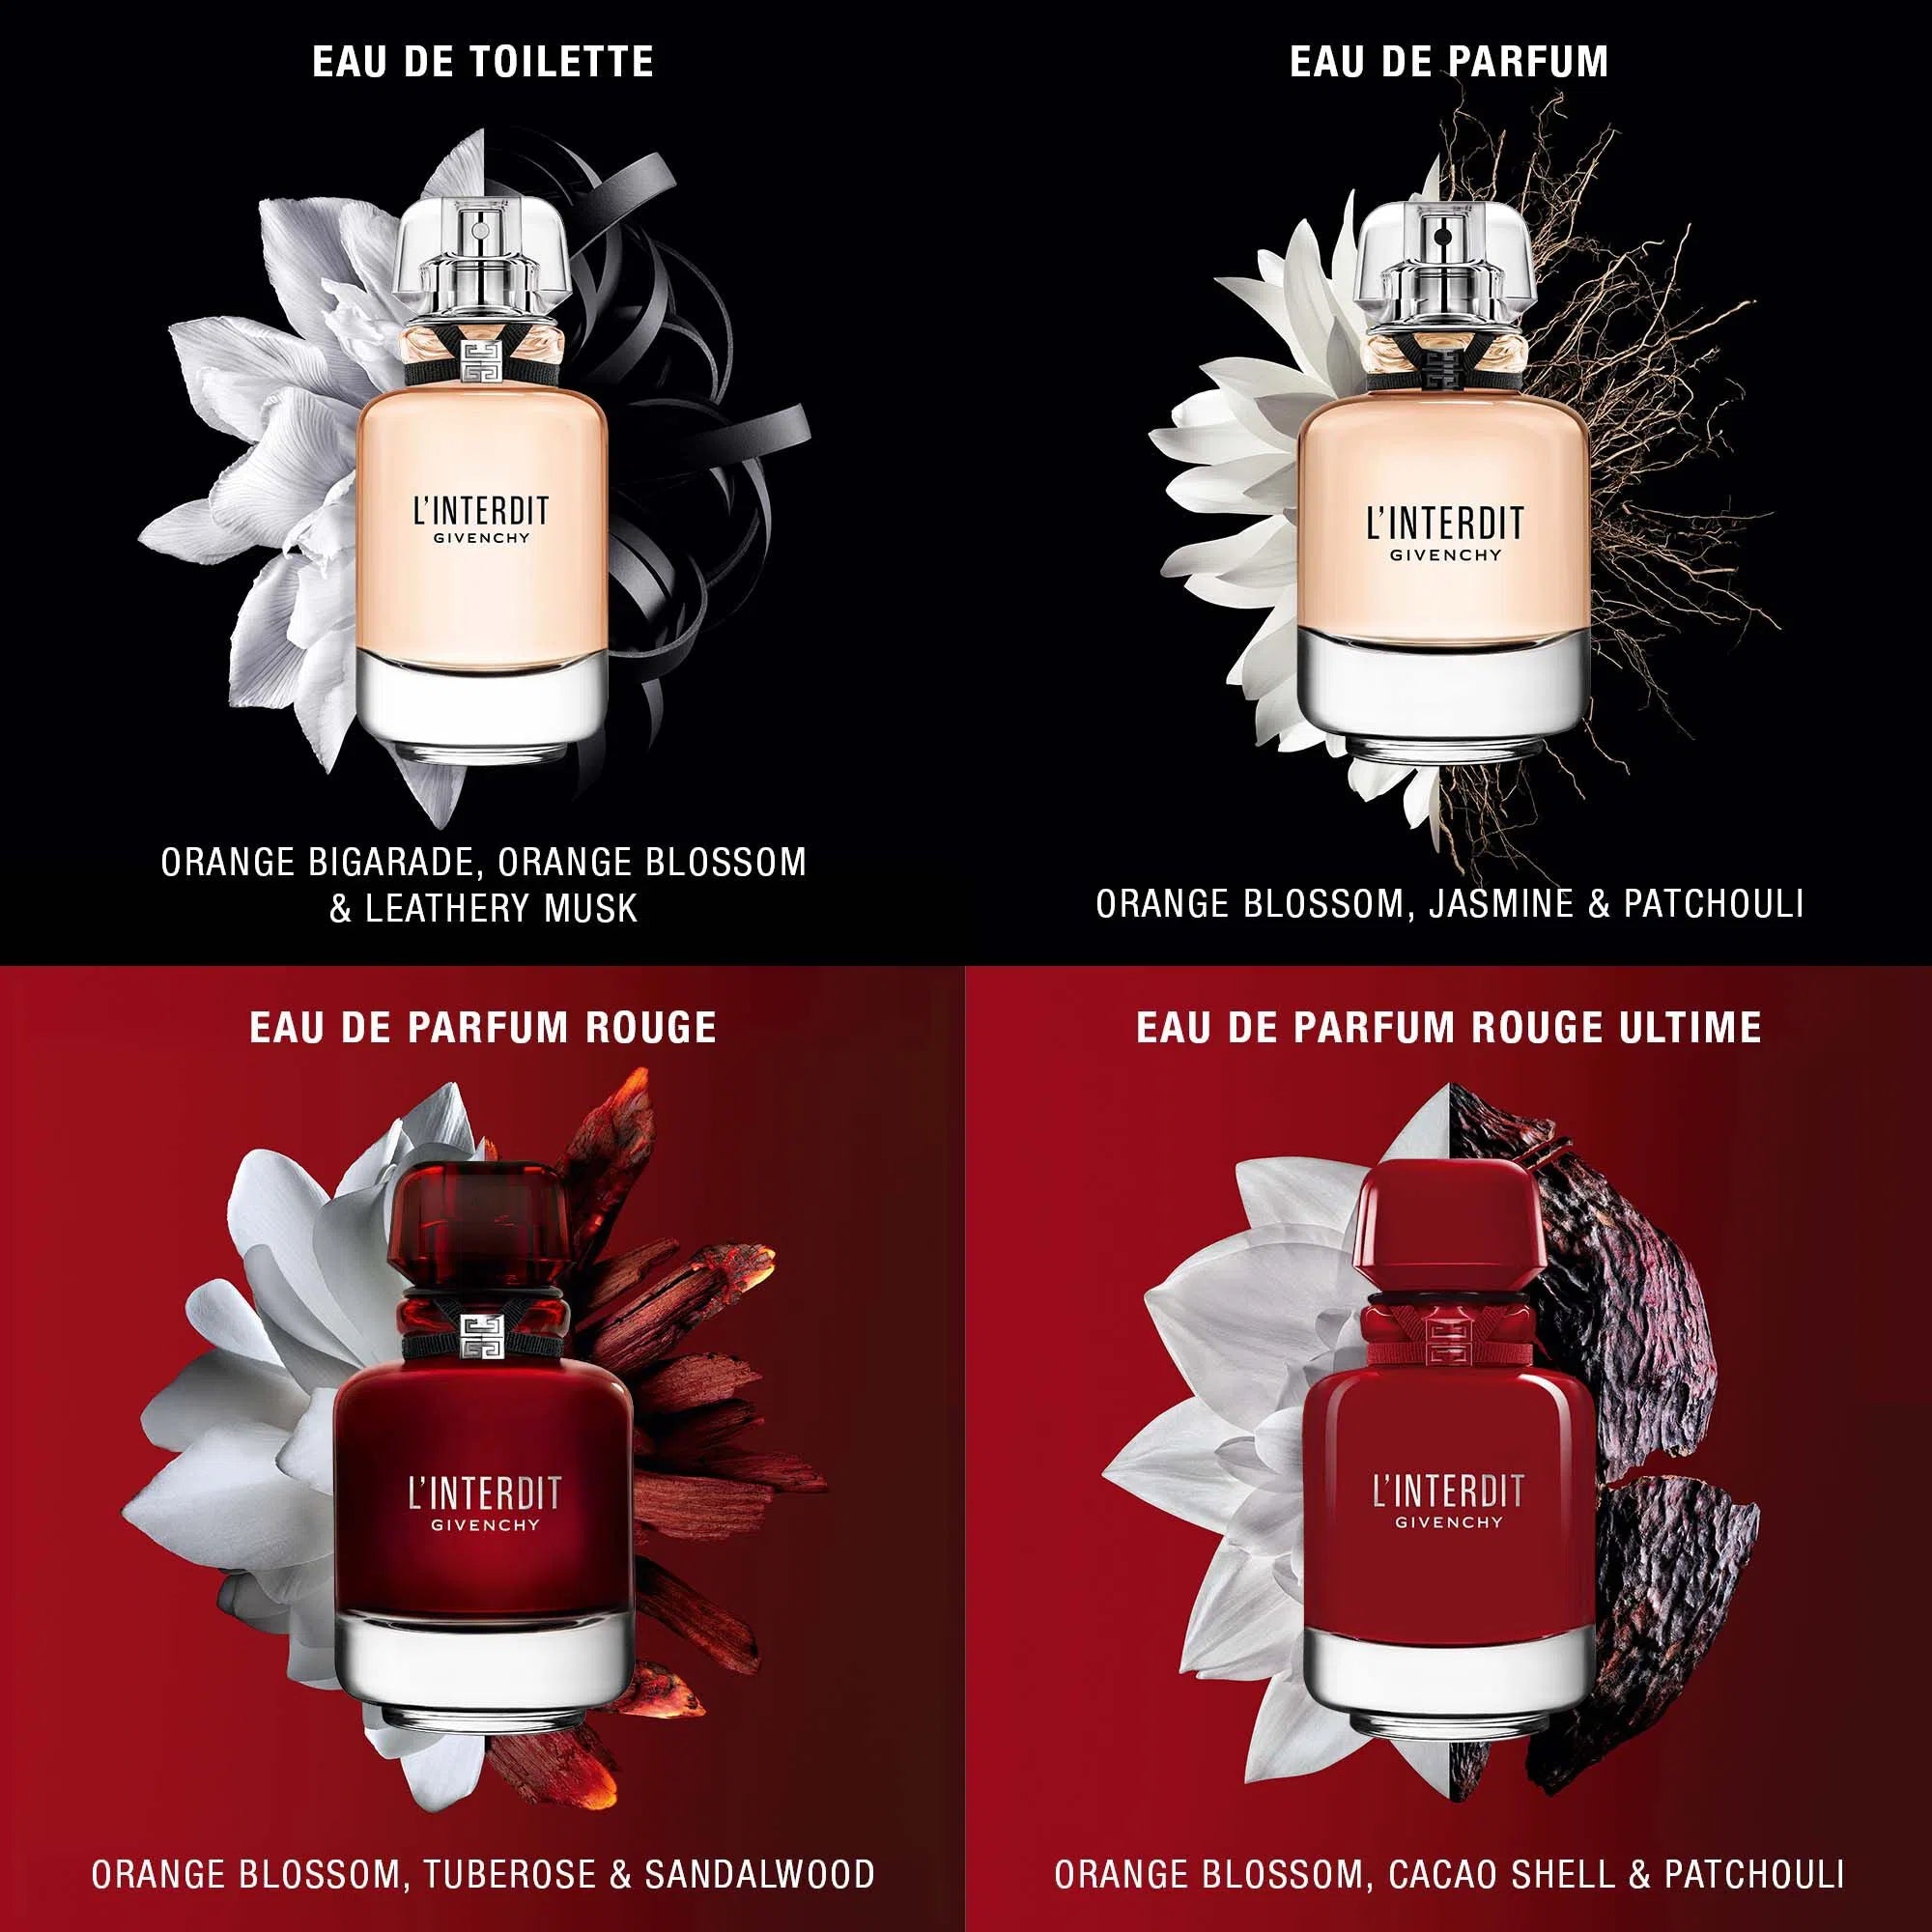 Perfume Givenchy L'Interdit Rouge Ultime EDP (W) / 80 ml - 3274872456341- Prive Perfumes Honduras